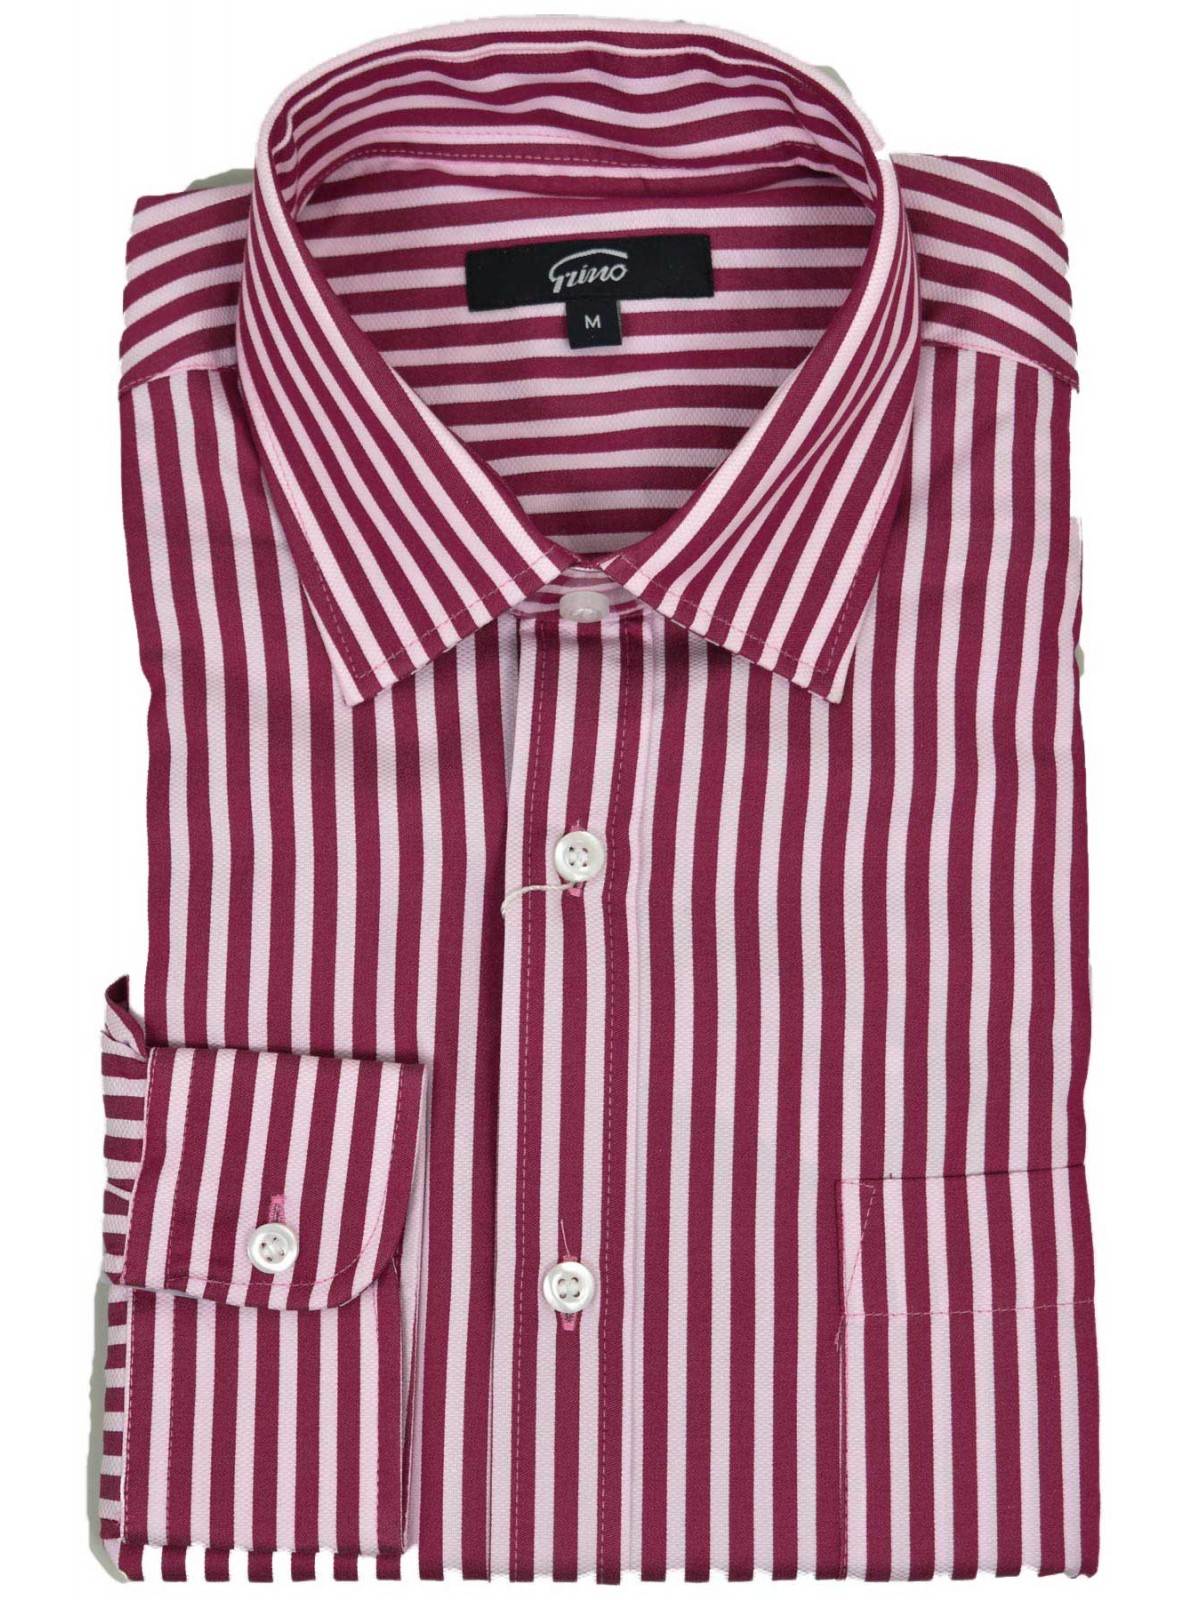 Red White Wide Striped Men's Shirt Spread Collar